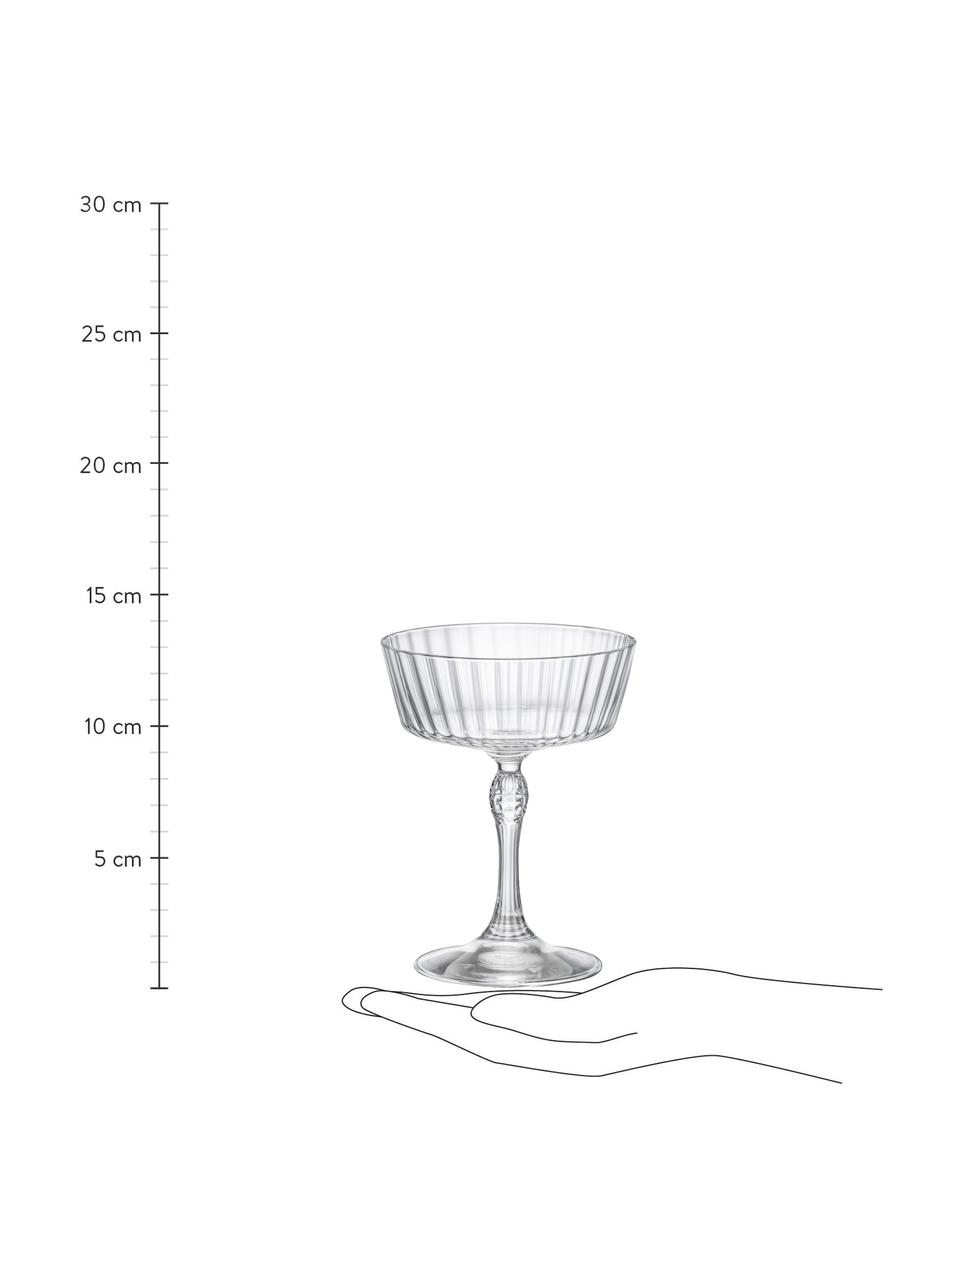 Bicchier da champagne con struttura scanalata America's Cocktail 6 pz, Vetro, Trasparente, Ø 10 x Alt. 14 cm, 280 ml